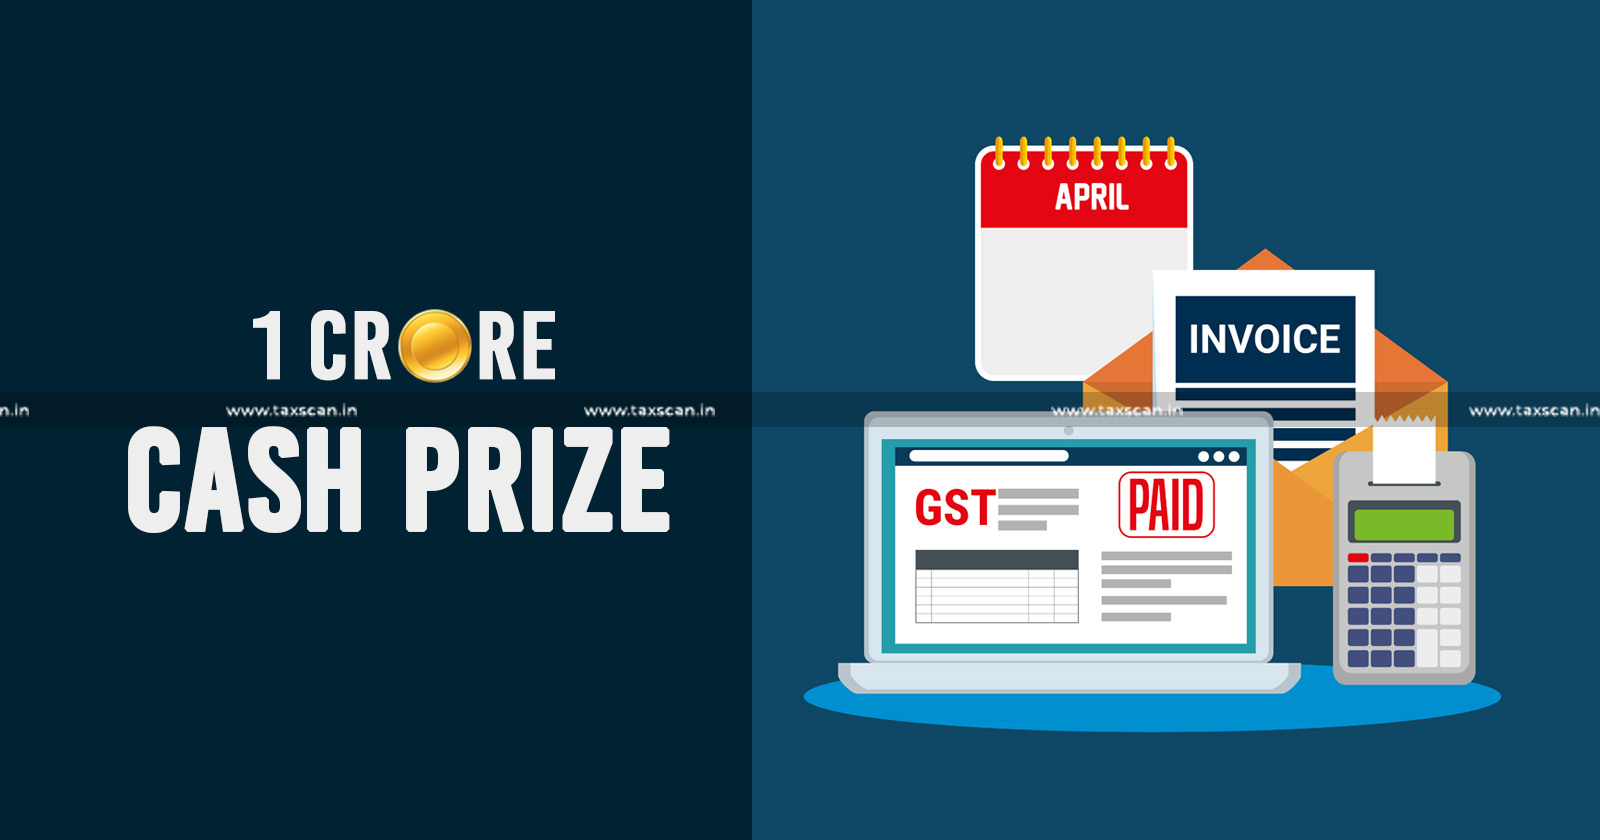 Central Govt - initiative - Mera Bill Mera Adhikar - Upload GST Invoice and Win Cash Prize up to 1 Crore - taxscan